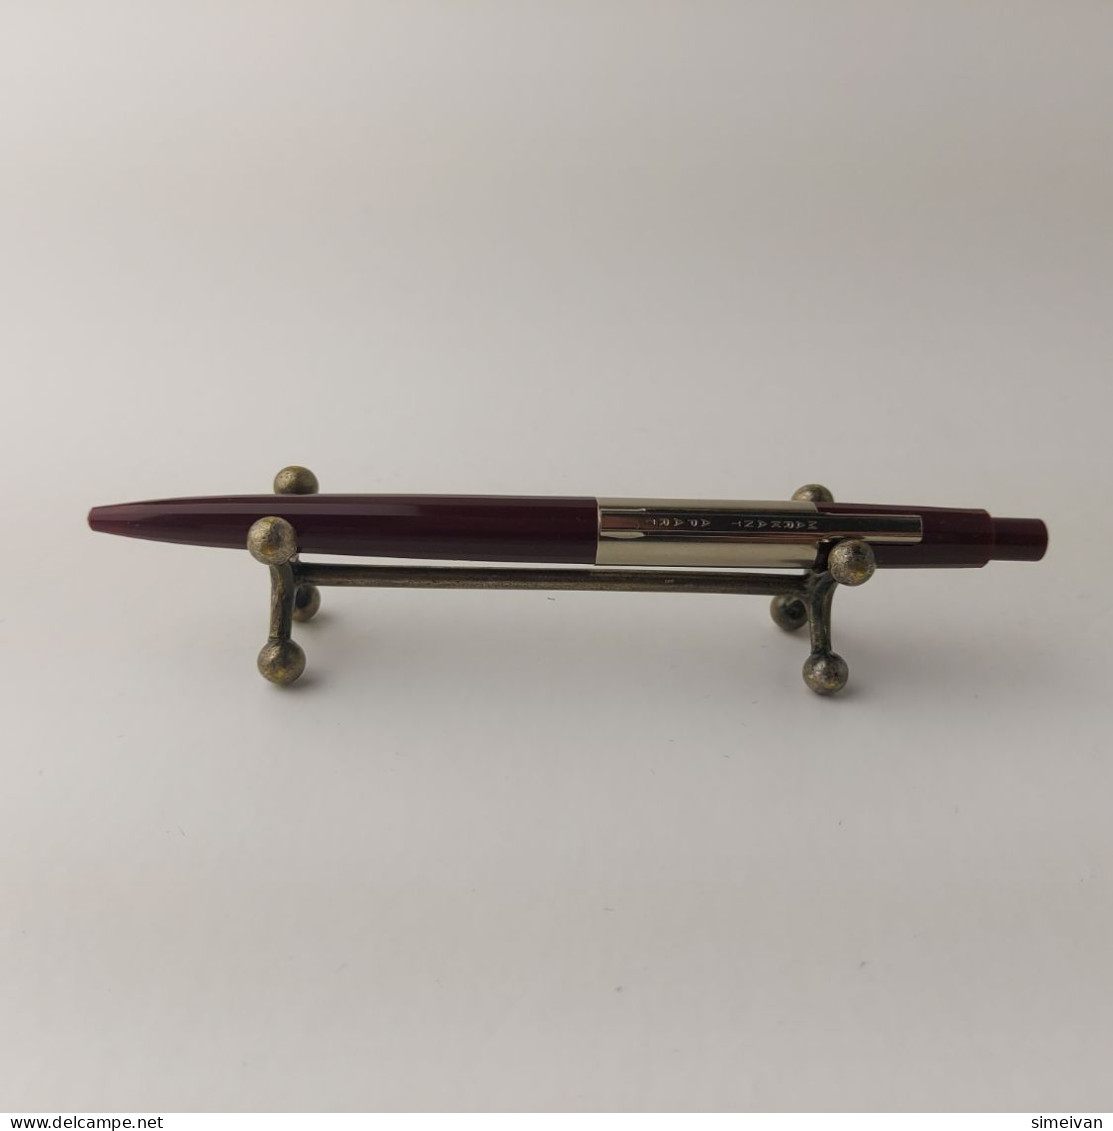 Vintage Markant Apart Ballpoint Pen Dark Red Plastic Chrome Trim Germany #5504 - Schreibgerät